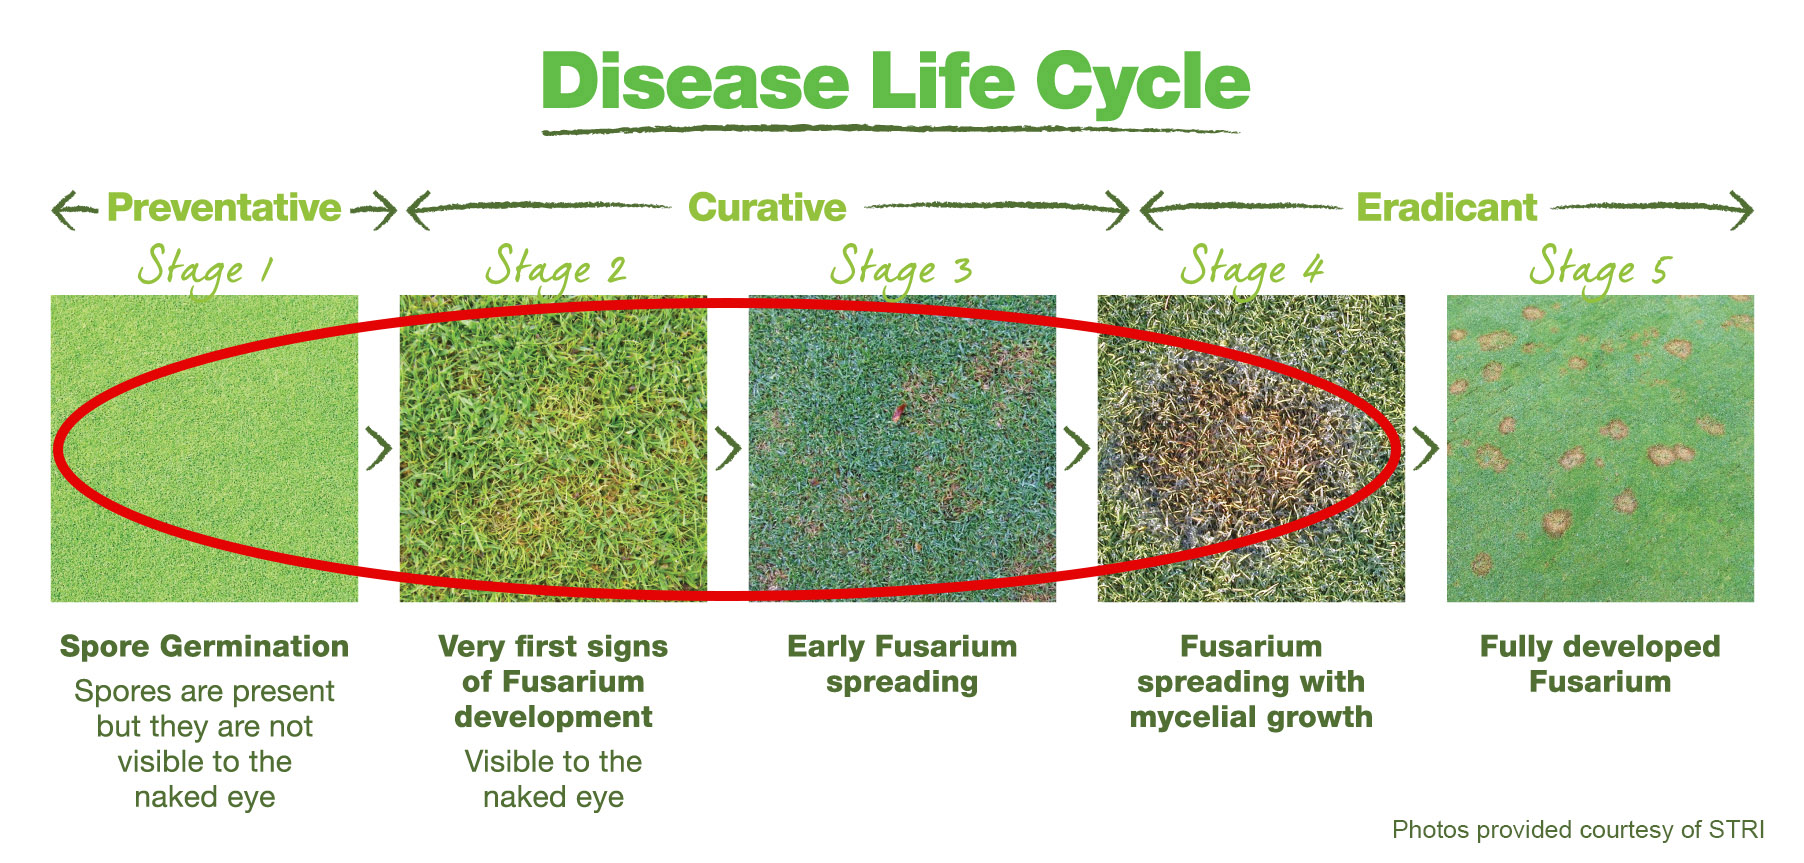 Disease life cycle of Fusarium